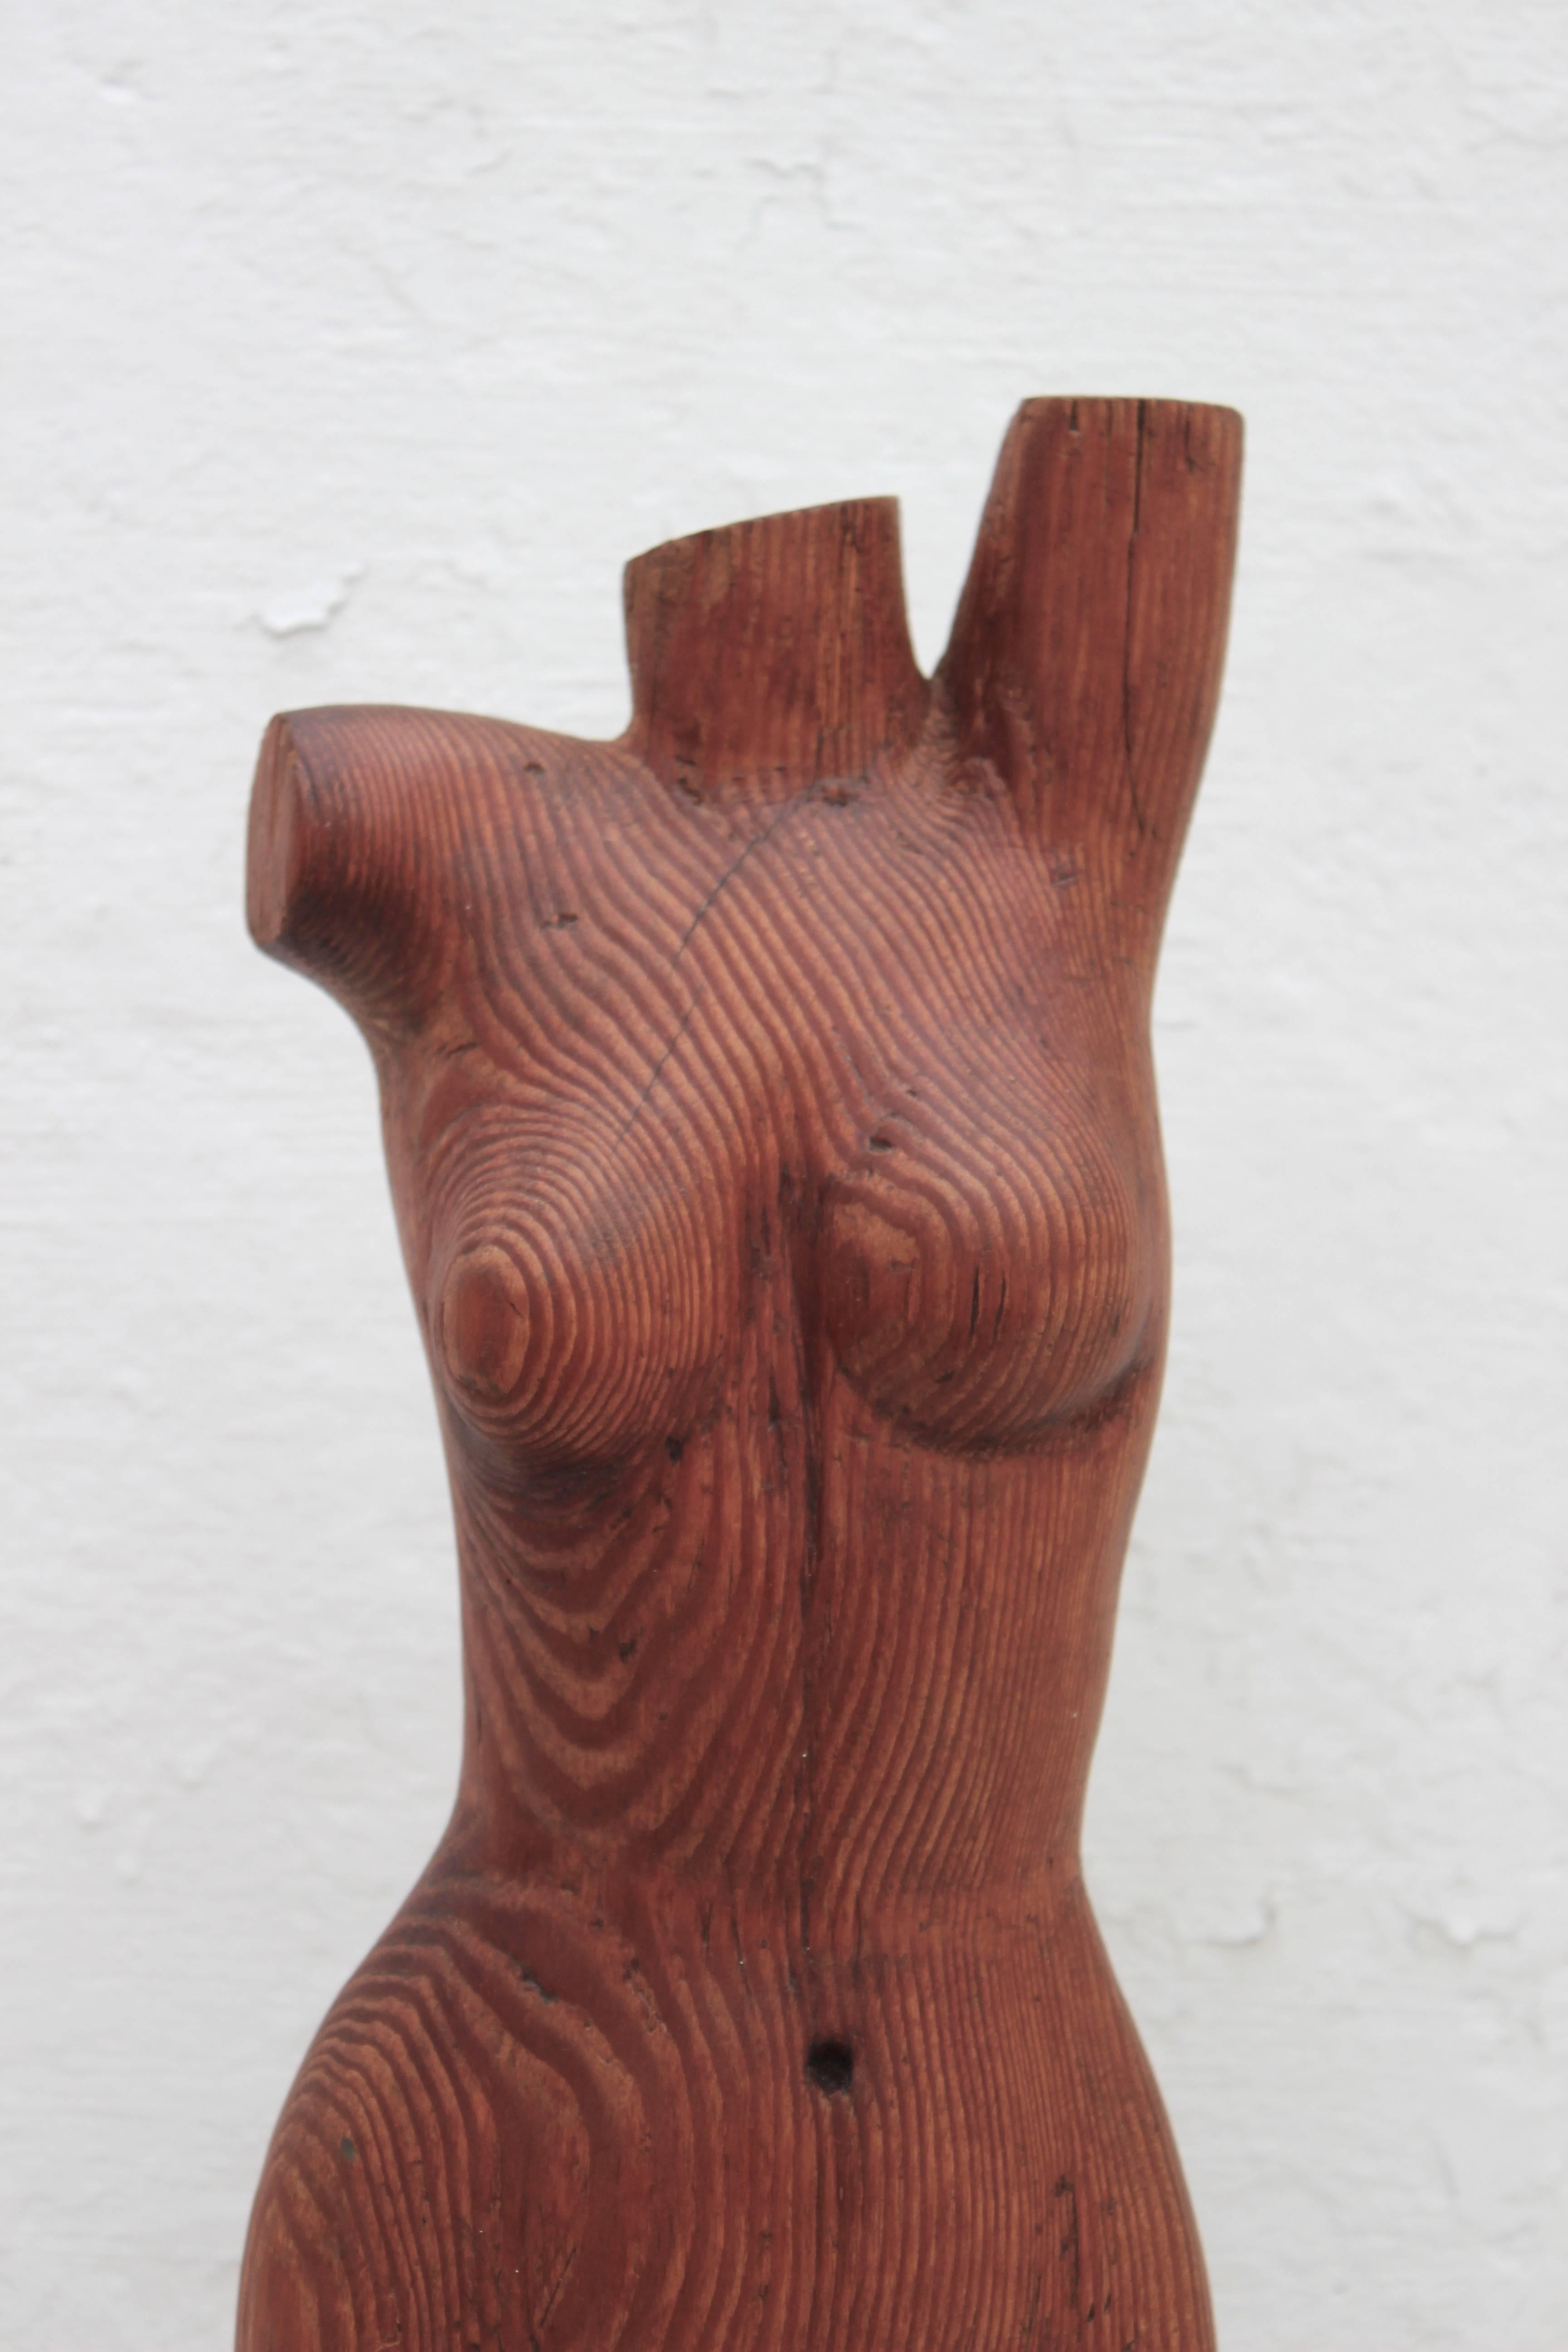 Carved wood figural sculpture of nude female's torso mounted on black laminate wood block plinth.